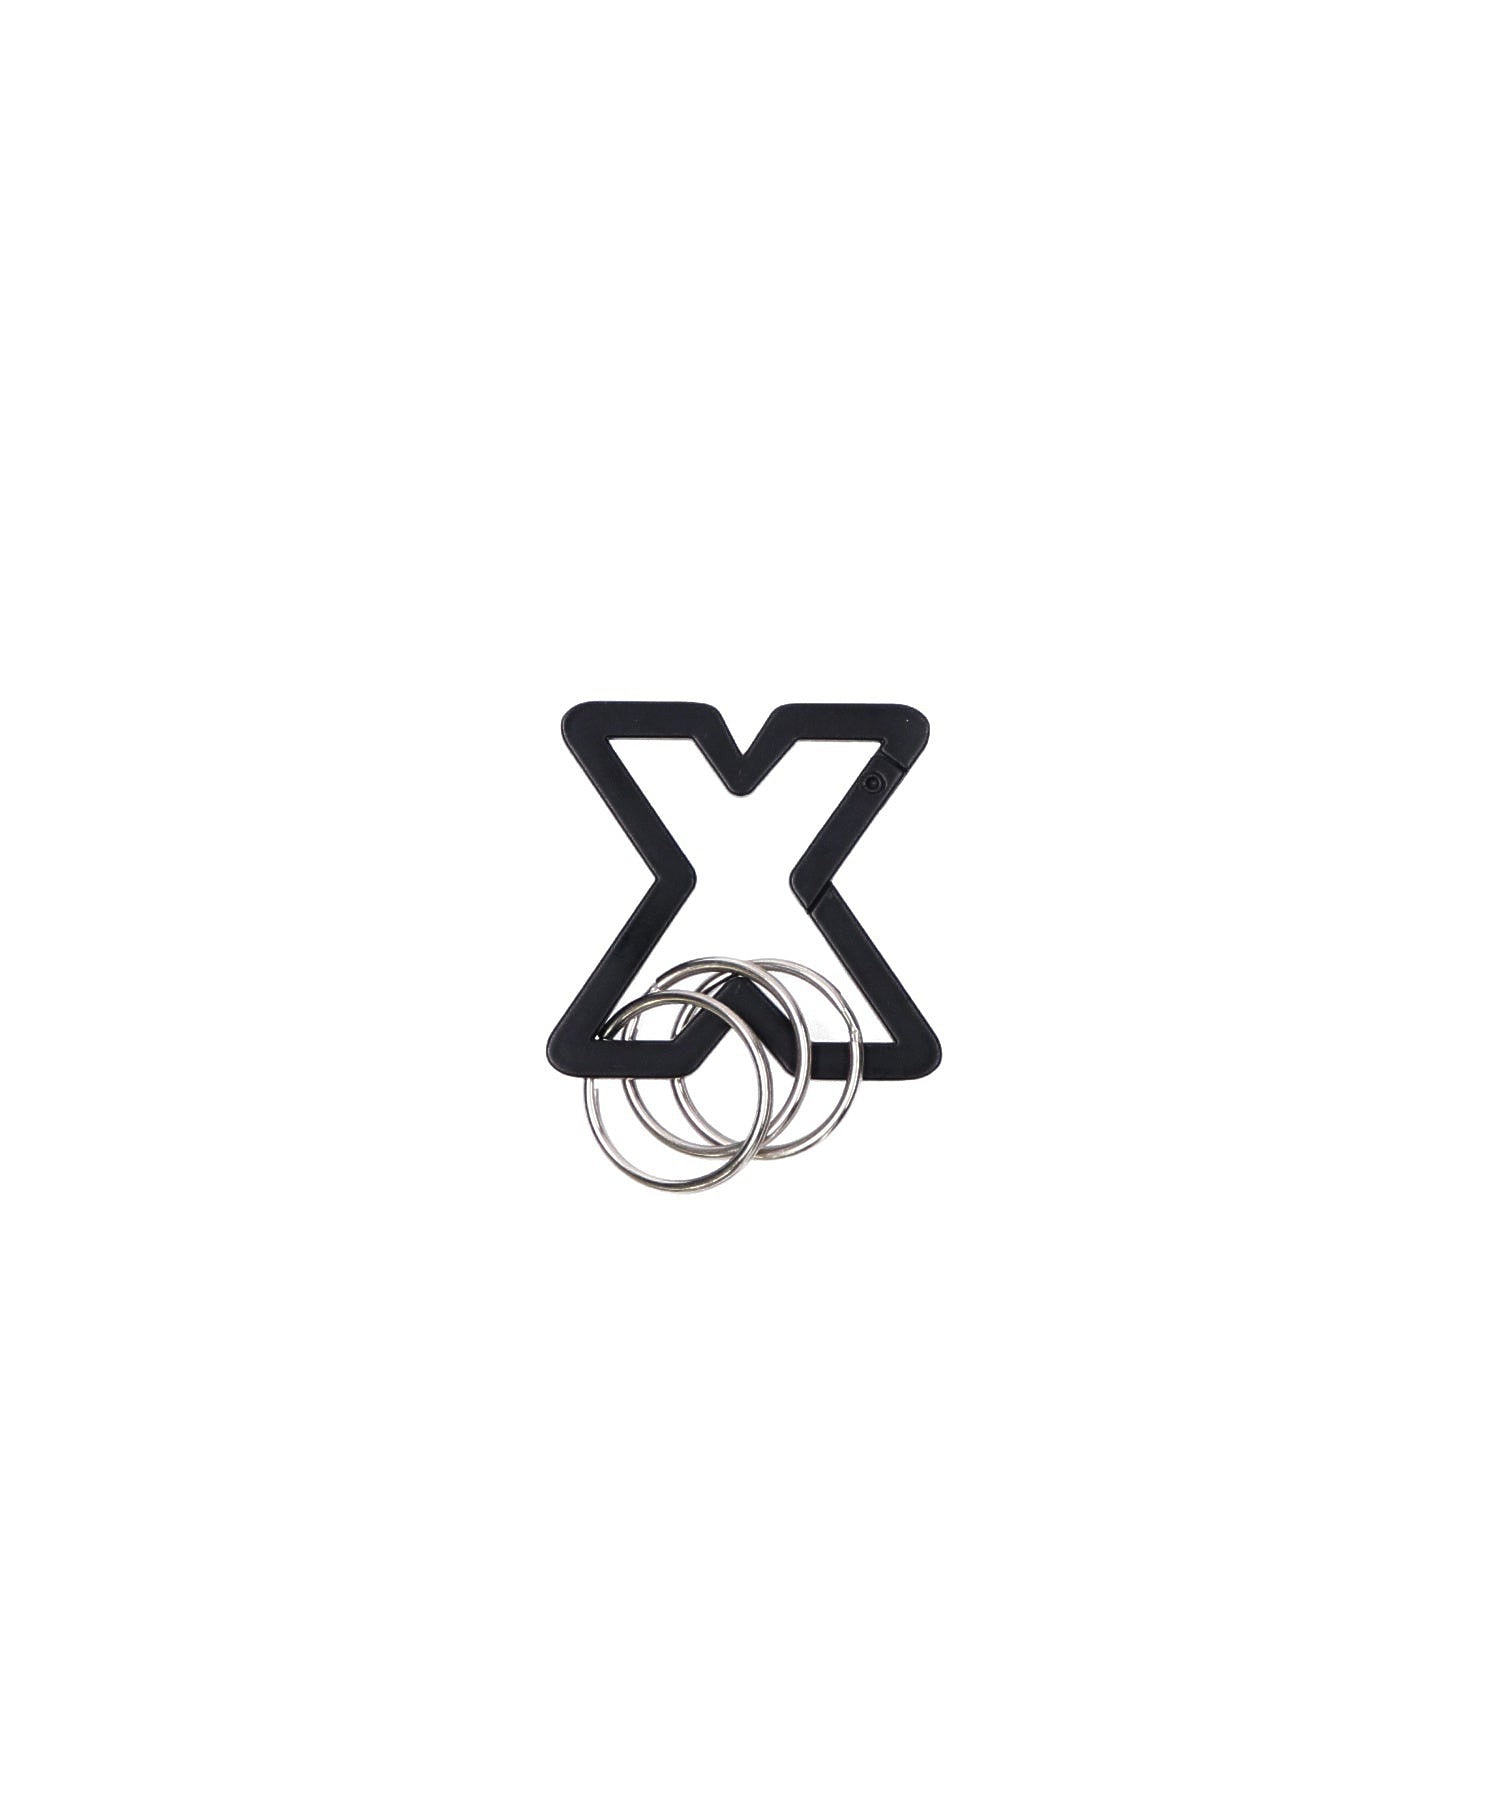 X-SHAPED CARABINER XLARGE